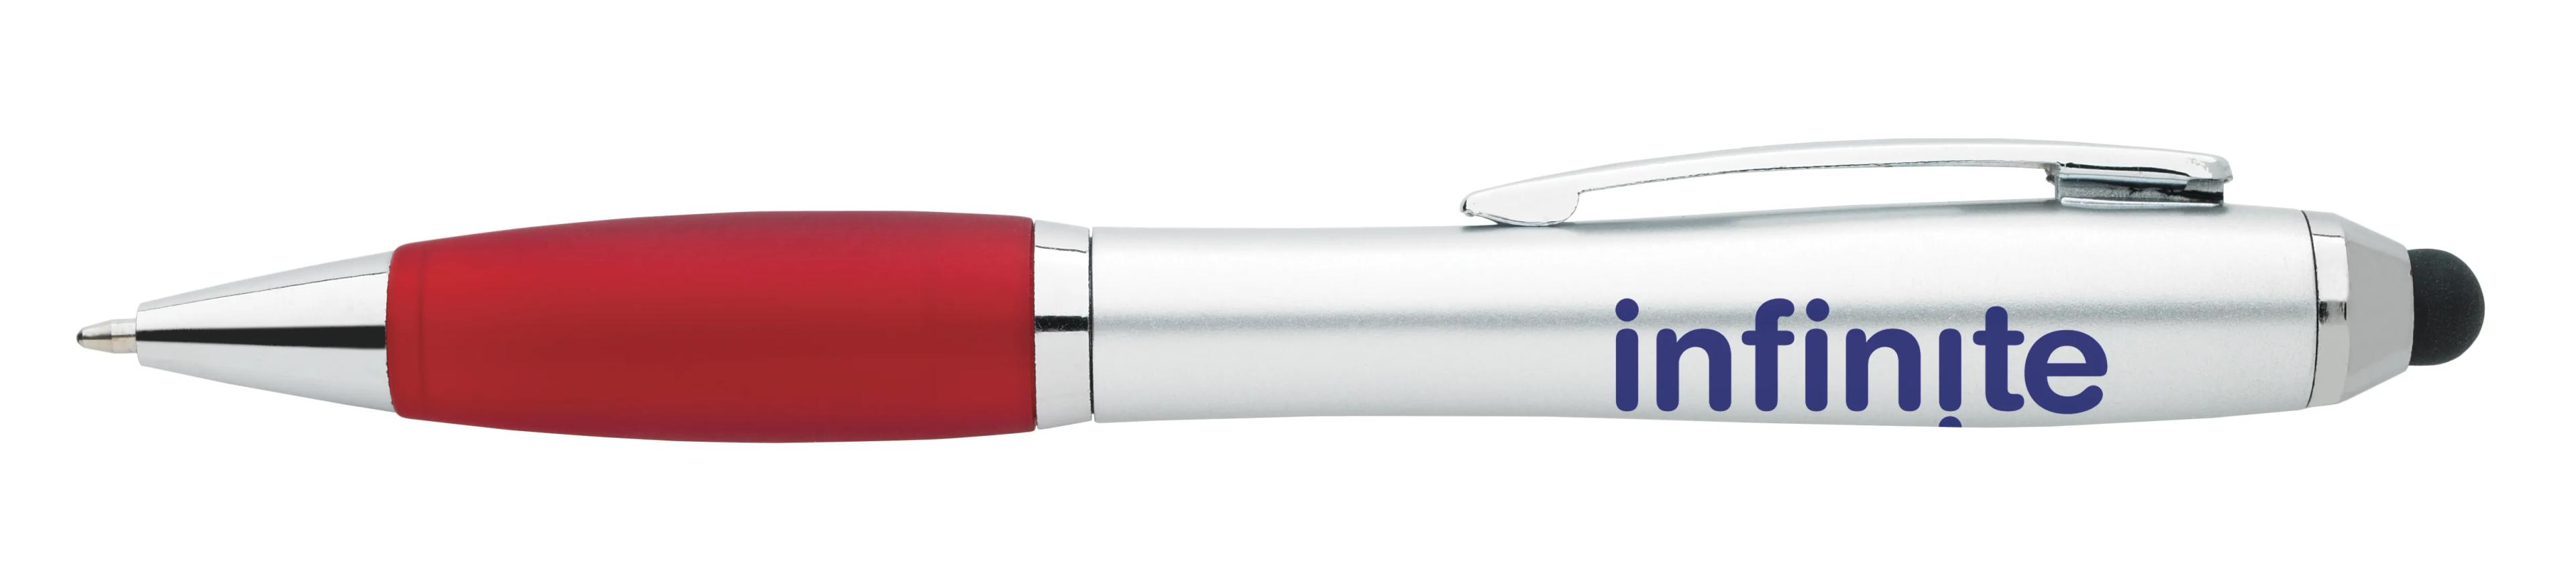 Ion Silver Stylus Pen 16 of 17